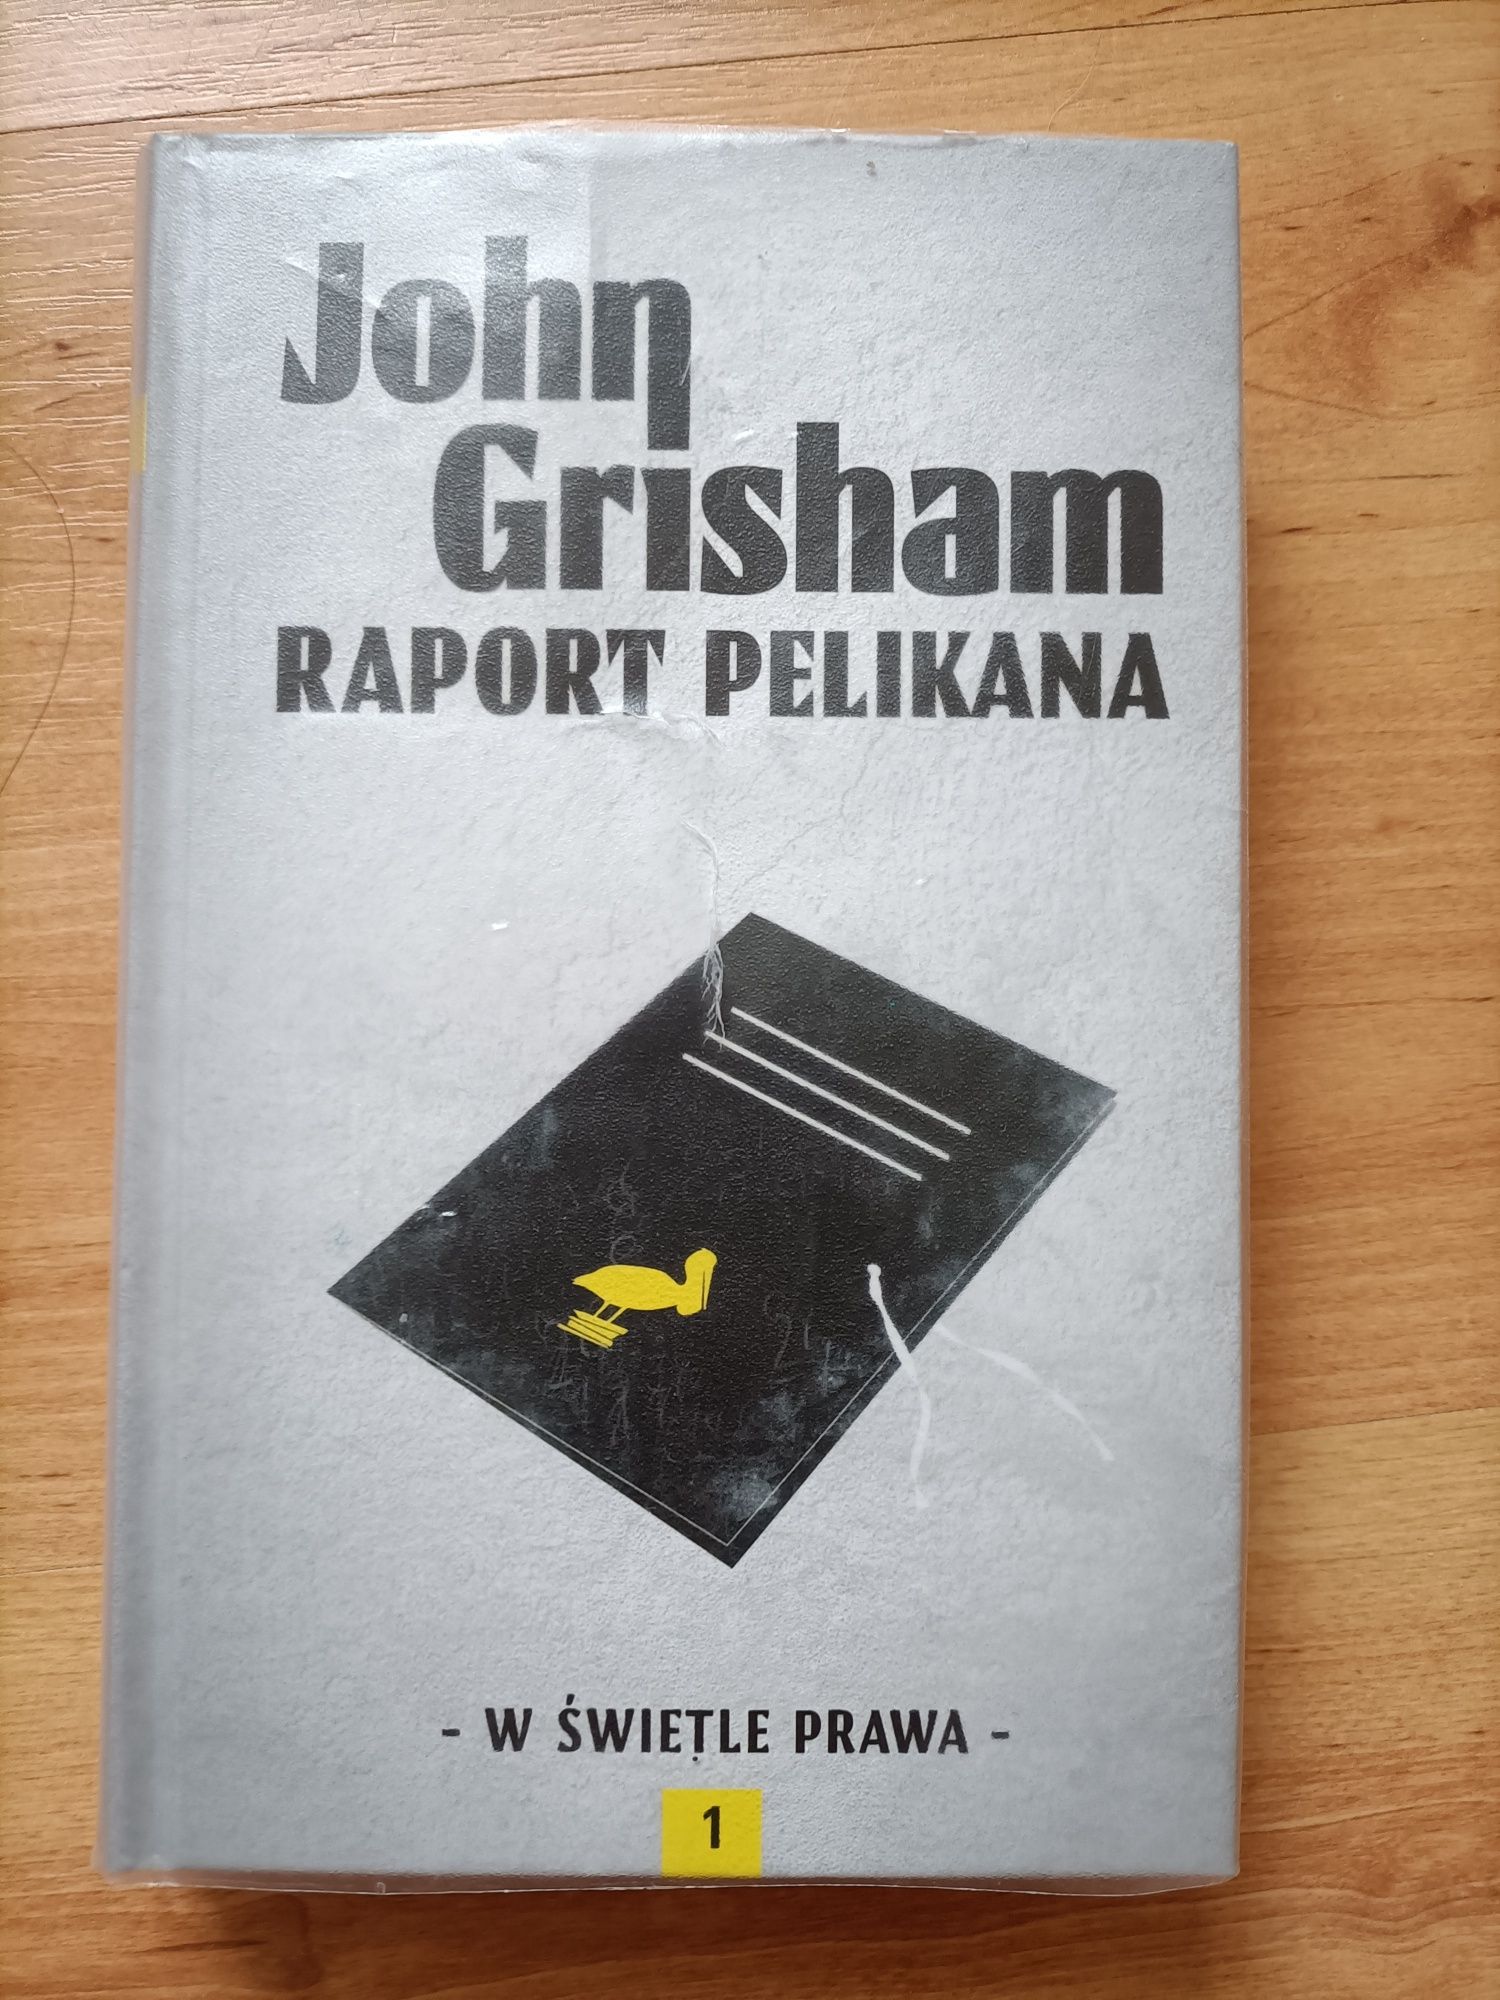 Raport pelikana - John Grisham